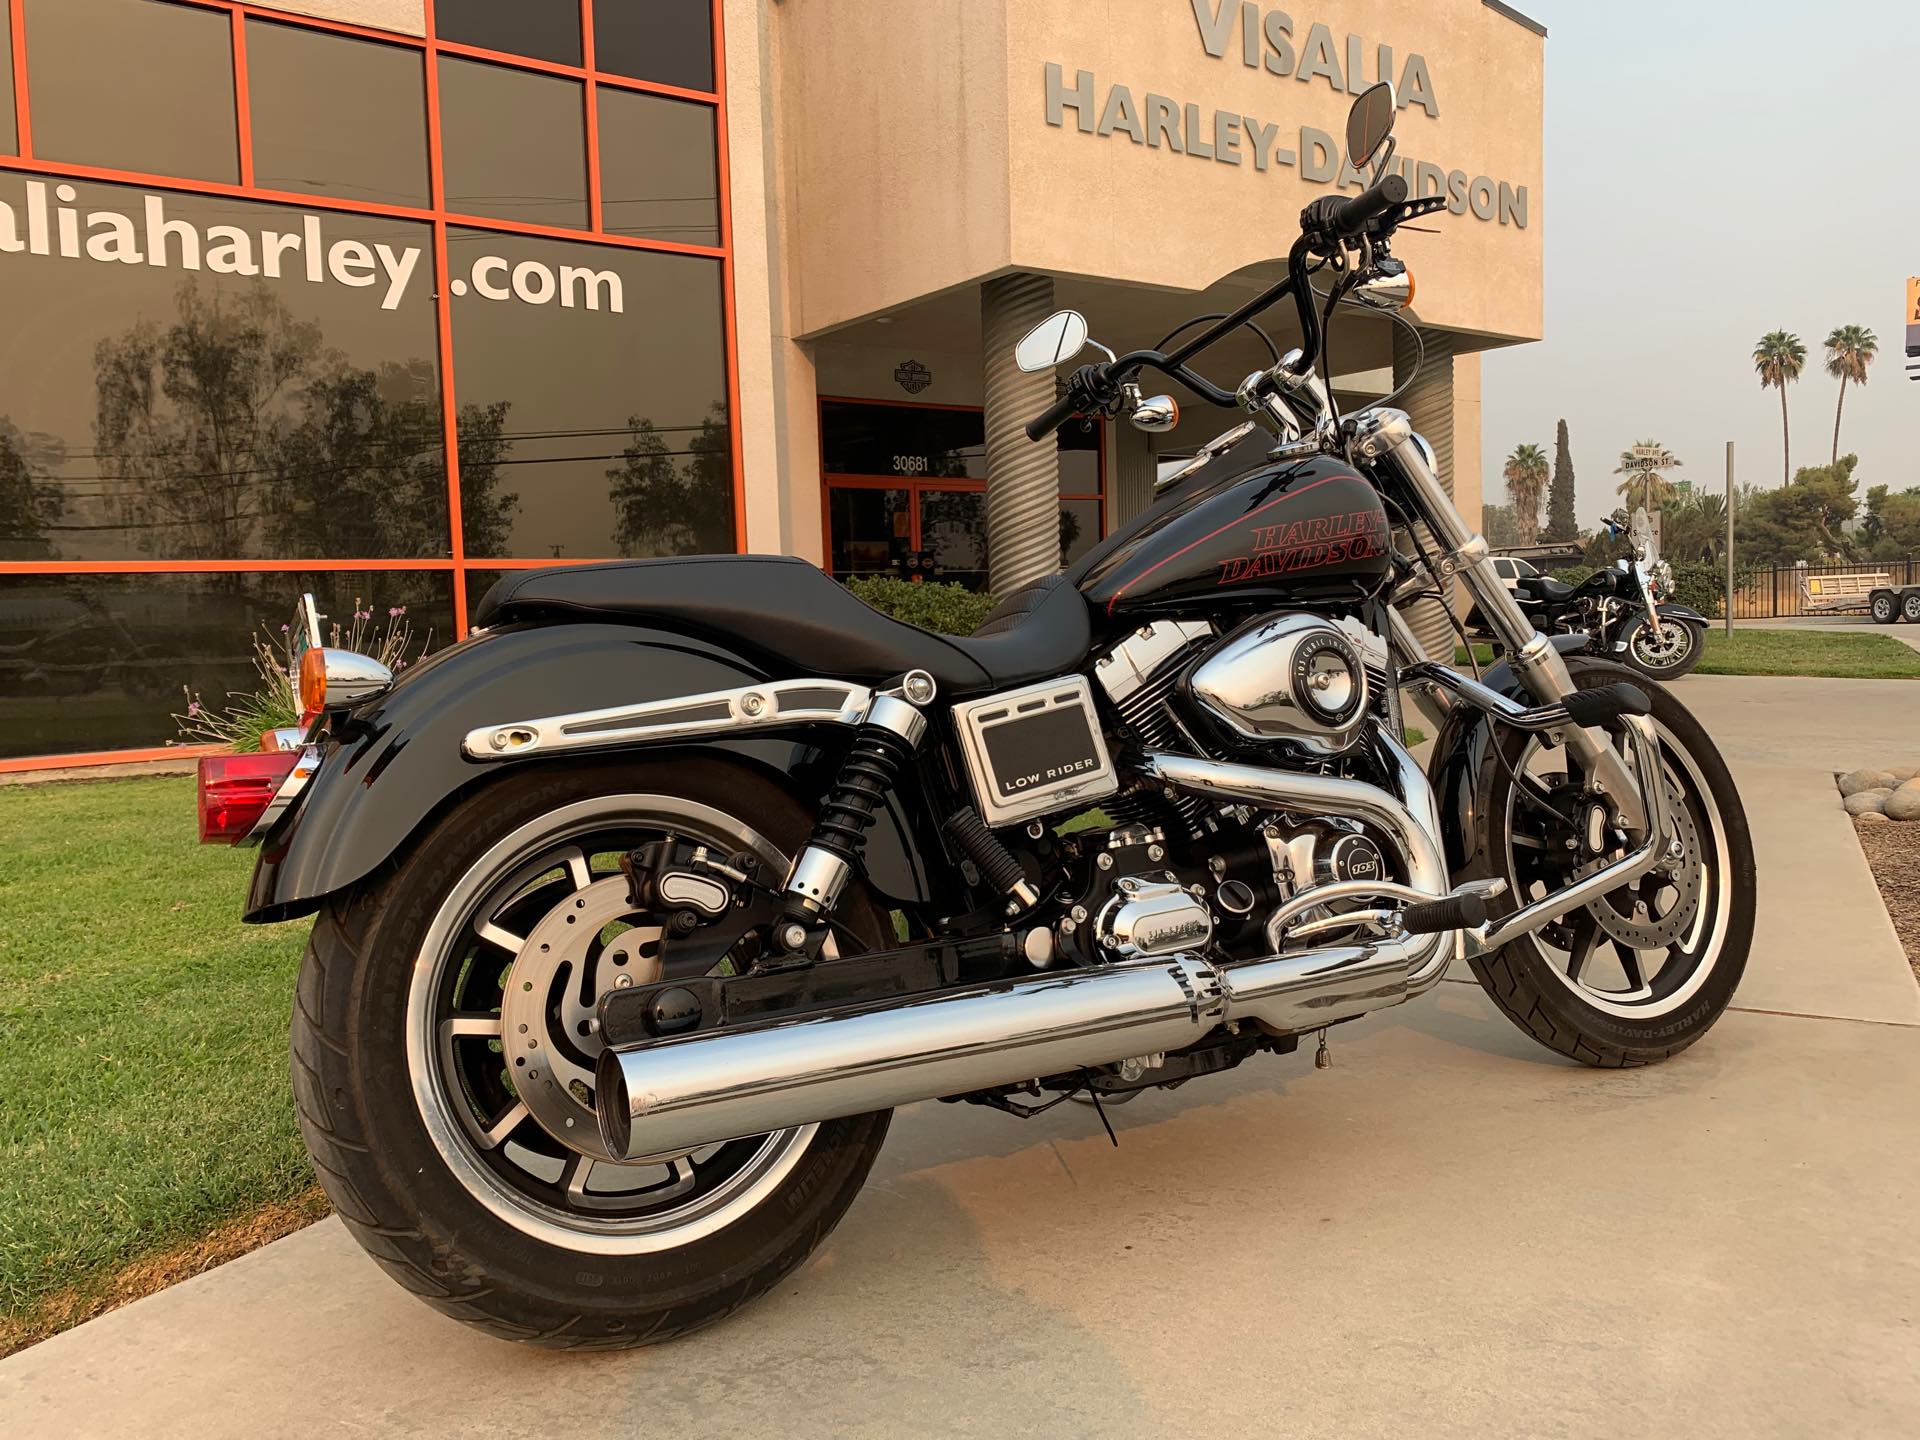 2014 Harley-Davidson Dyna Low Rider at Visalia Harley-Davidson